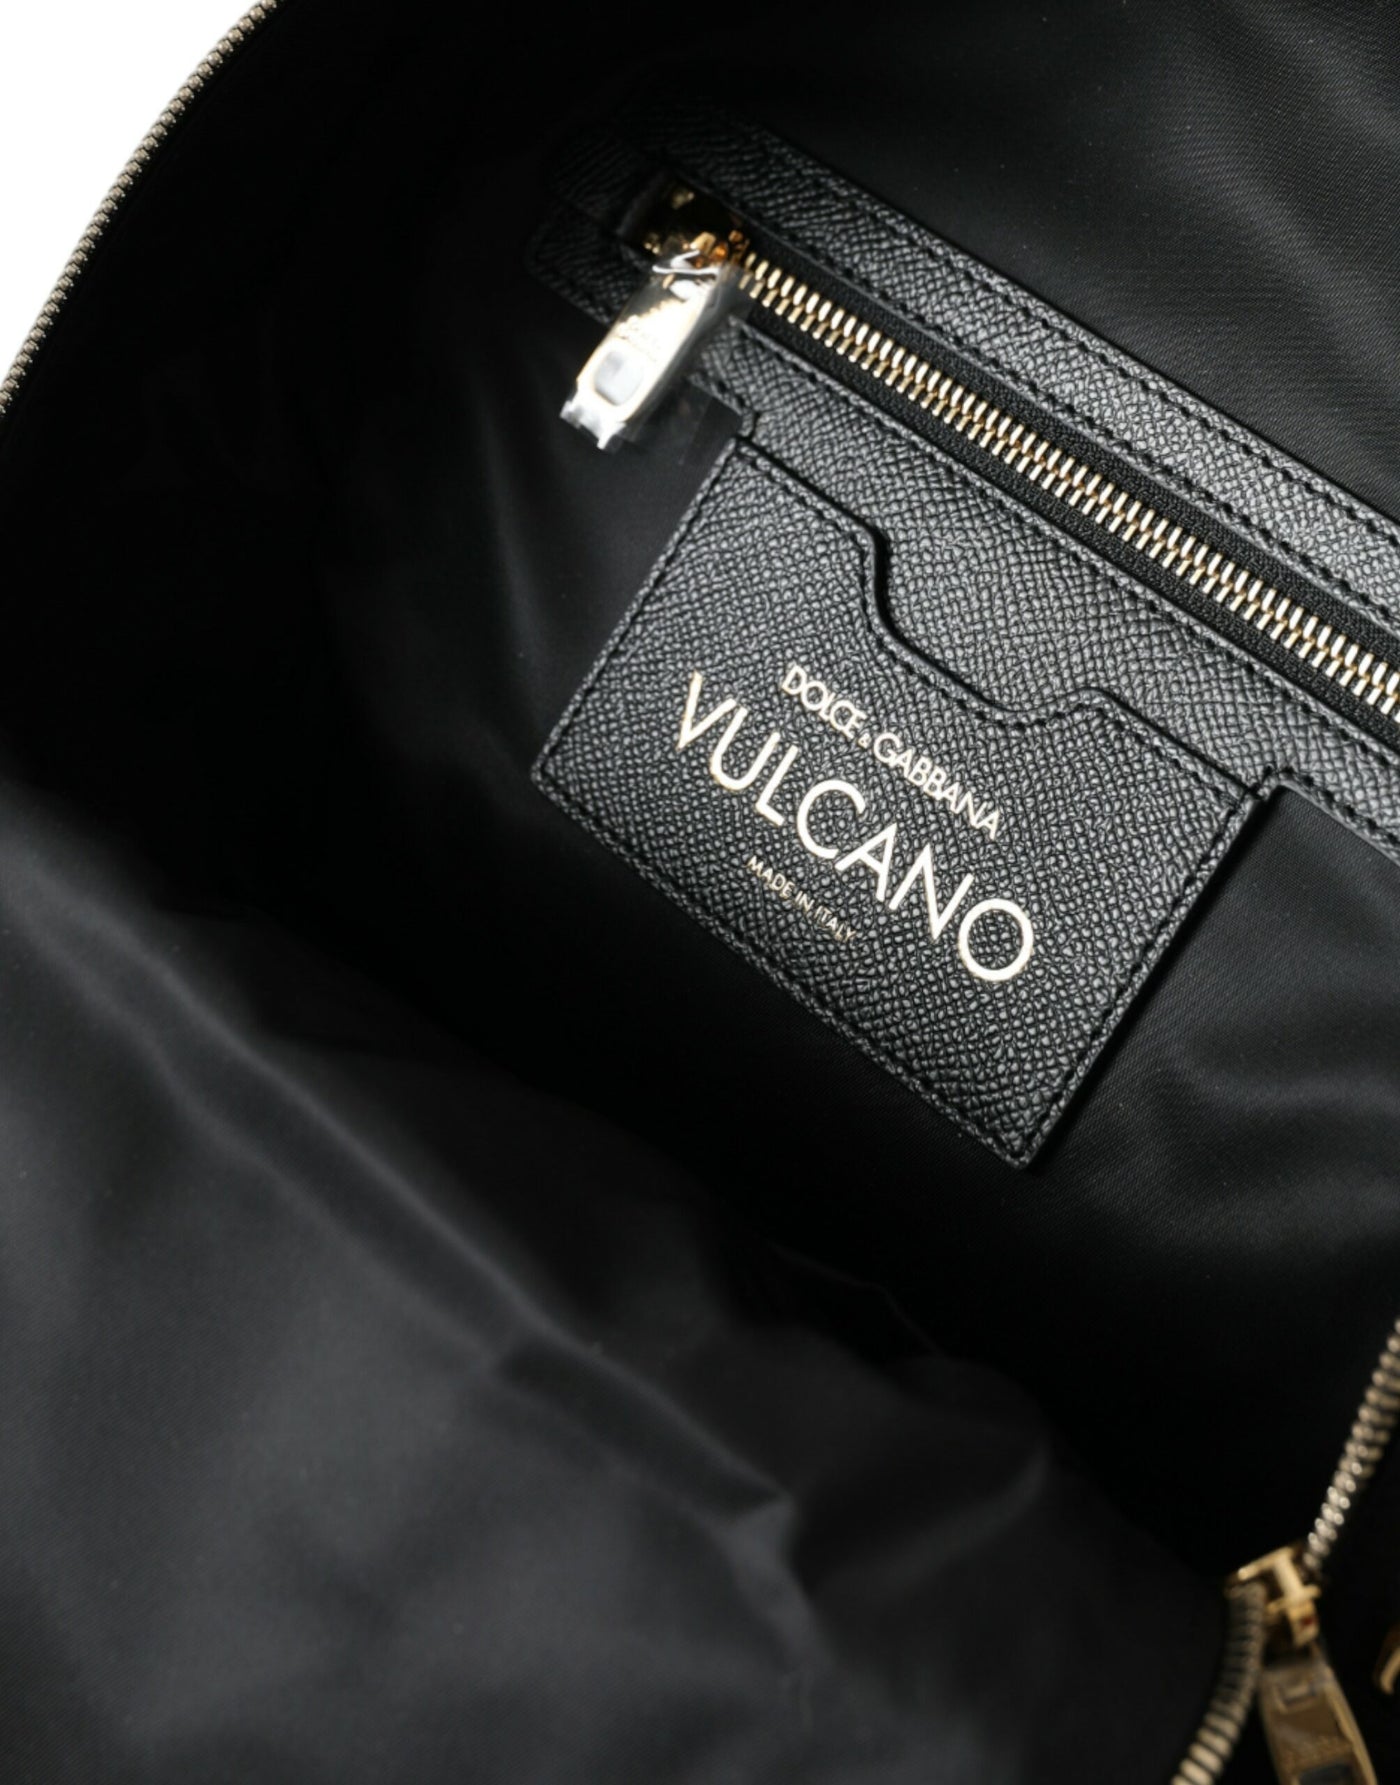 Dolce & Gabbana Black #DGFAMILY Embellished Backpack VULCANO Bag